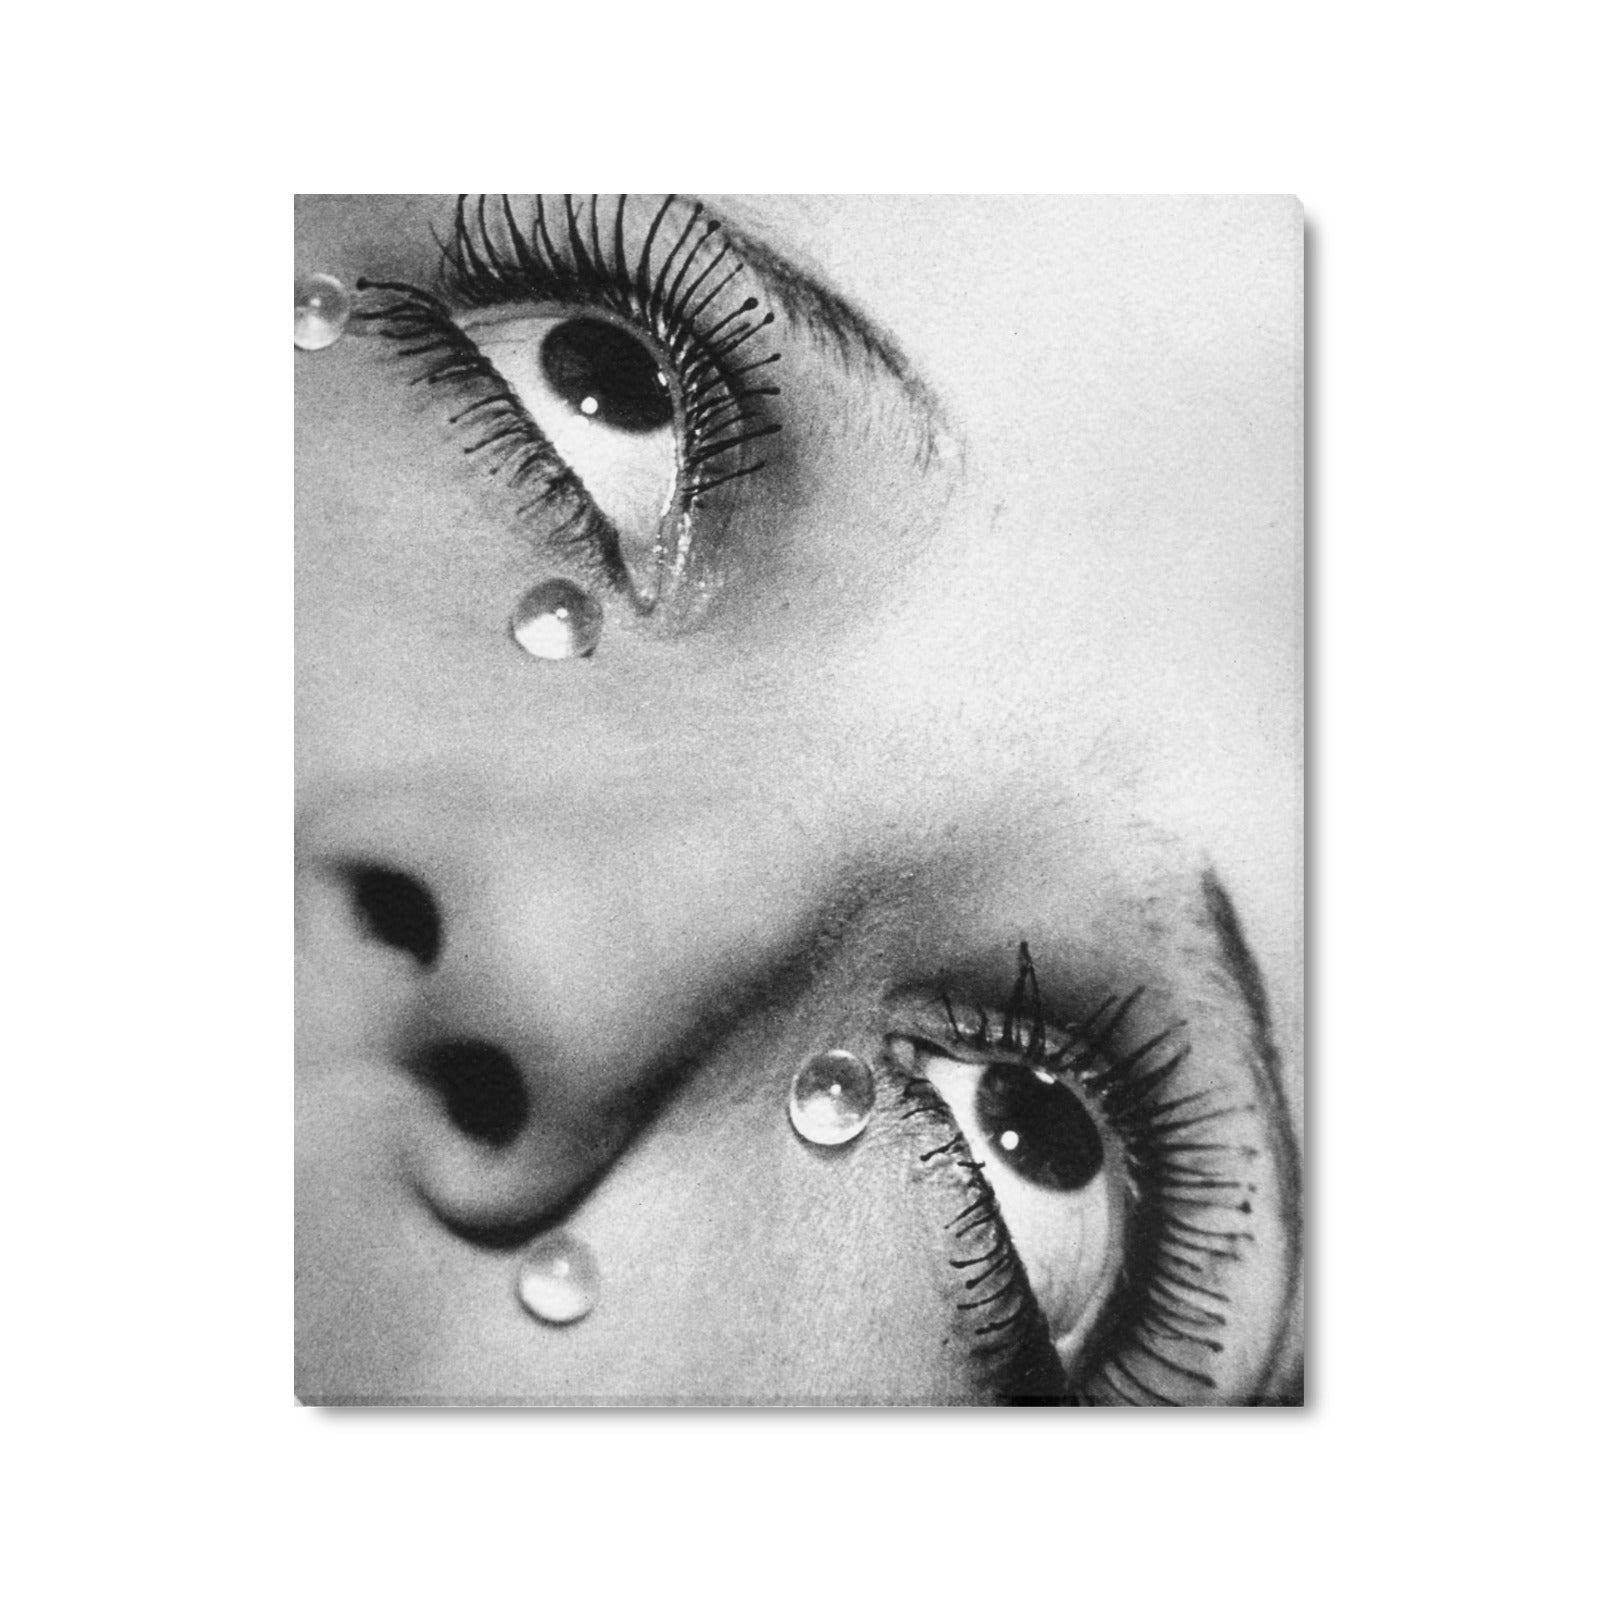 MAN RAY - GLASS TEARS, 1932 - CANVAS PRINT 20"x 24"